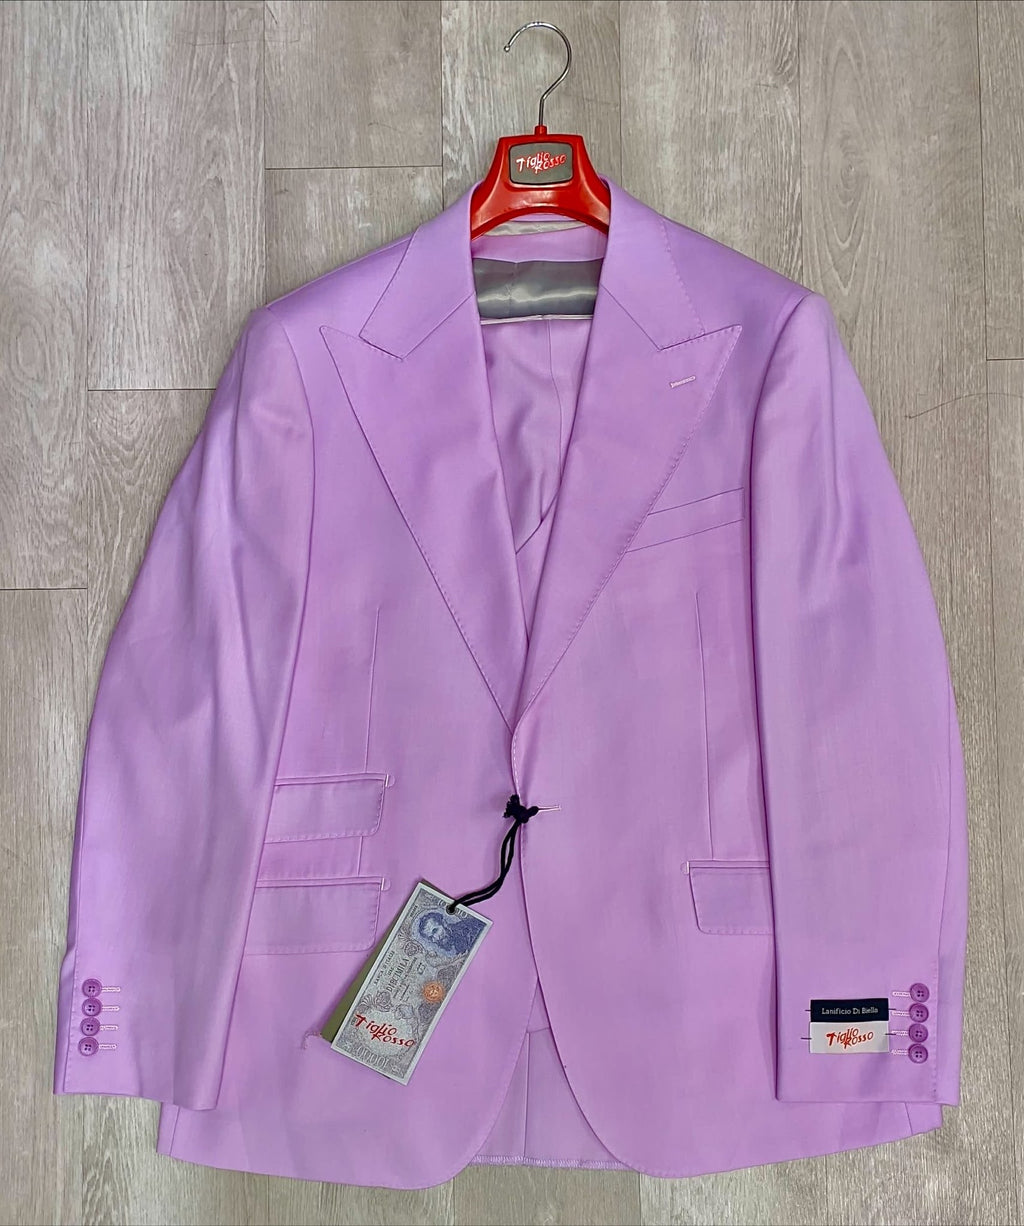 Tiglio Rosso Orvietto  Solid Lilac Wool Suit/Vest TL2649